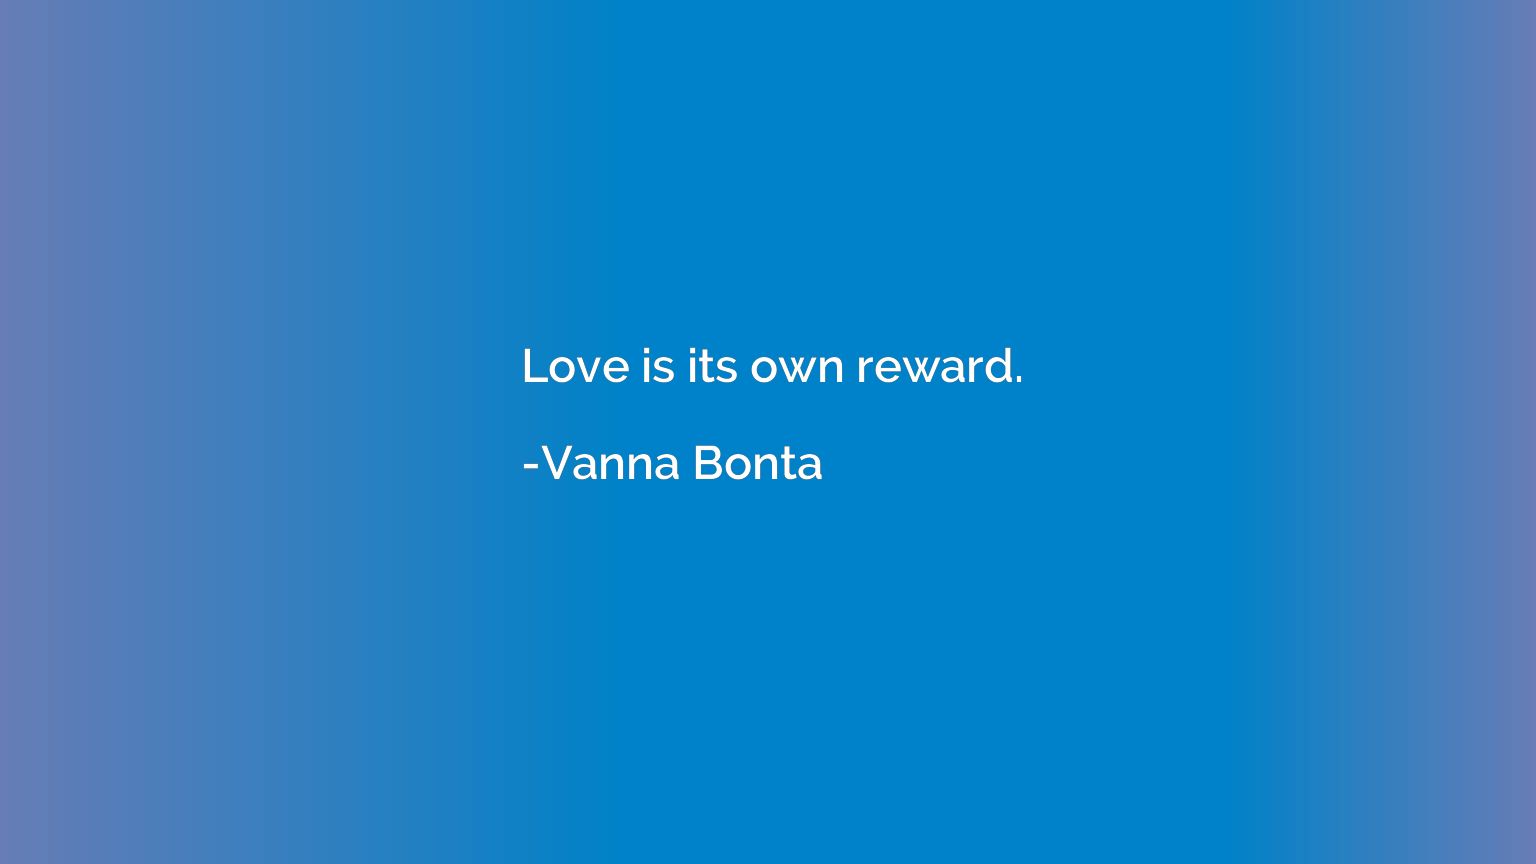 Love is its own reward.